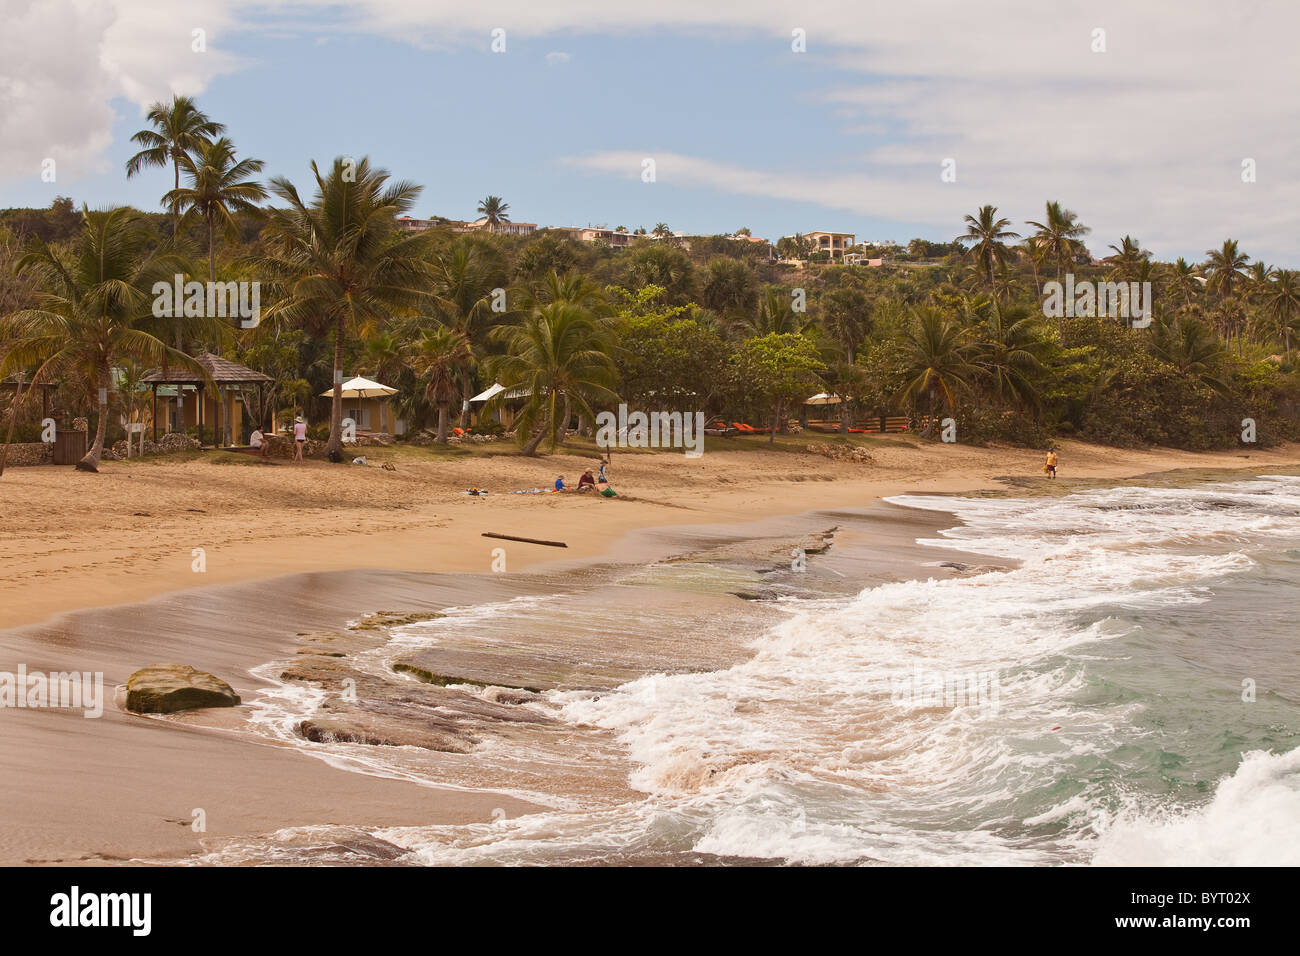 Playa Shacks beach in Isabela Puerto Rico Stock Photo - Alamy